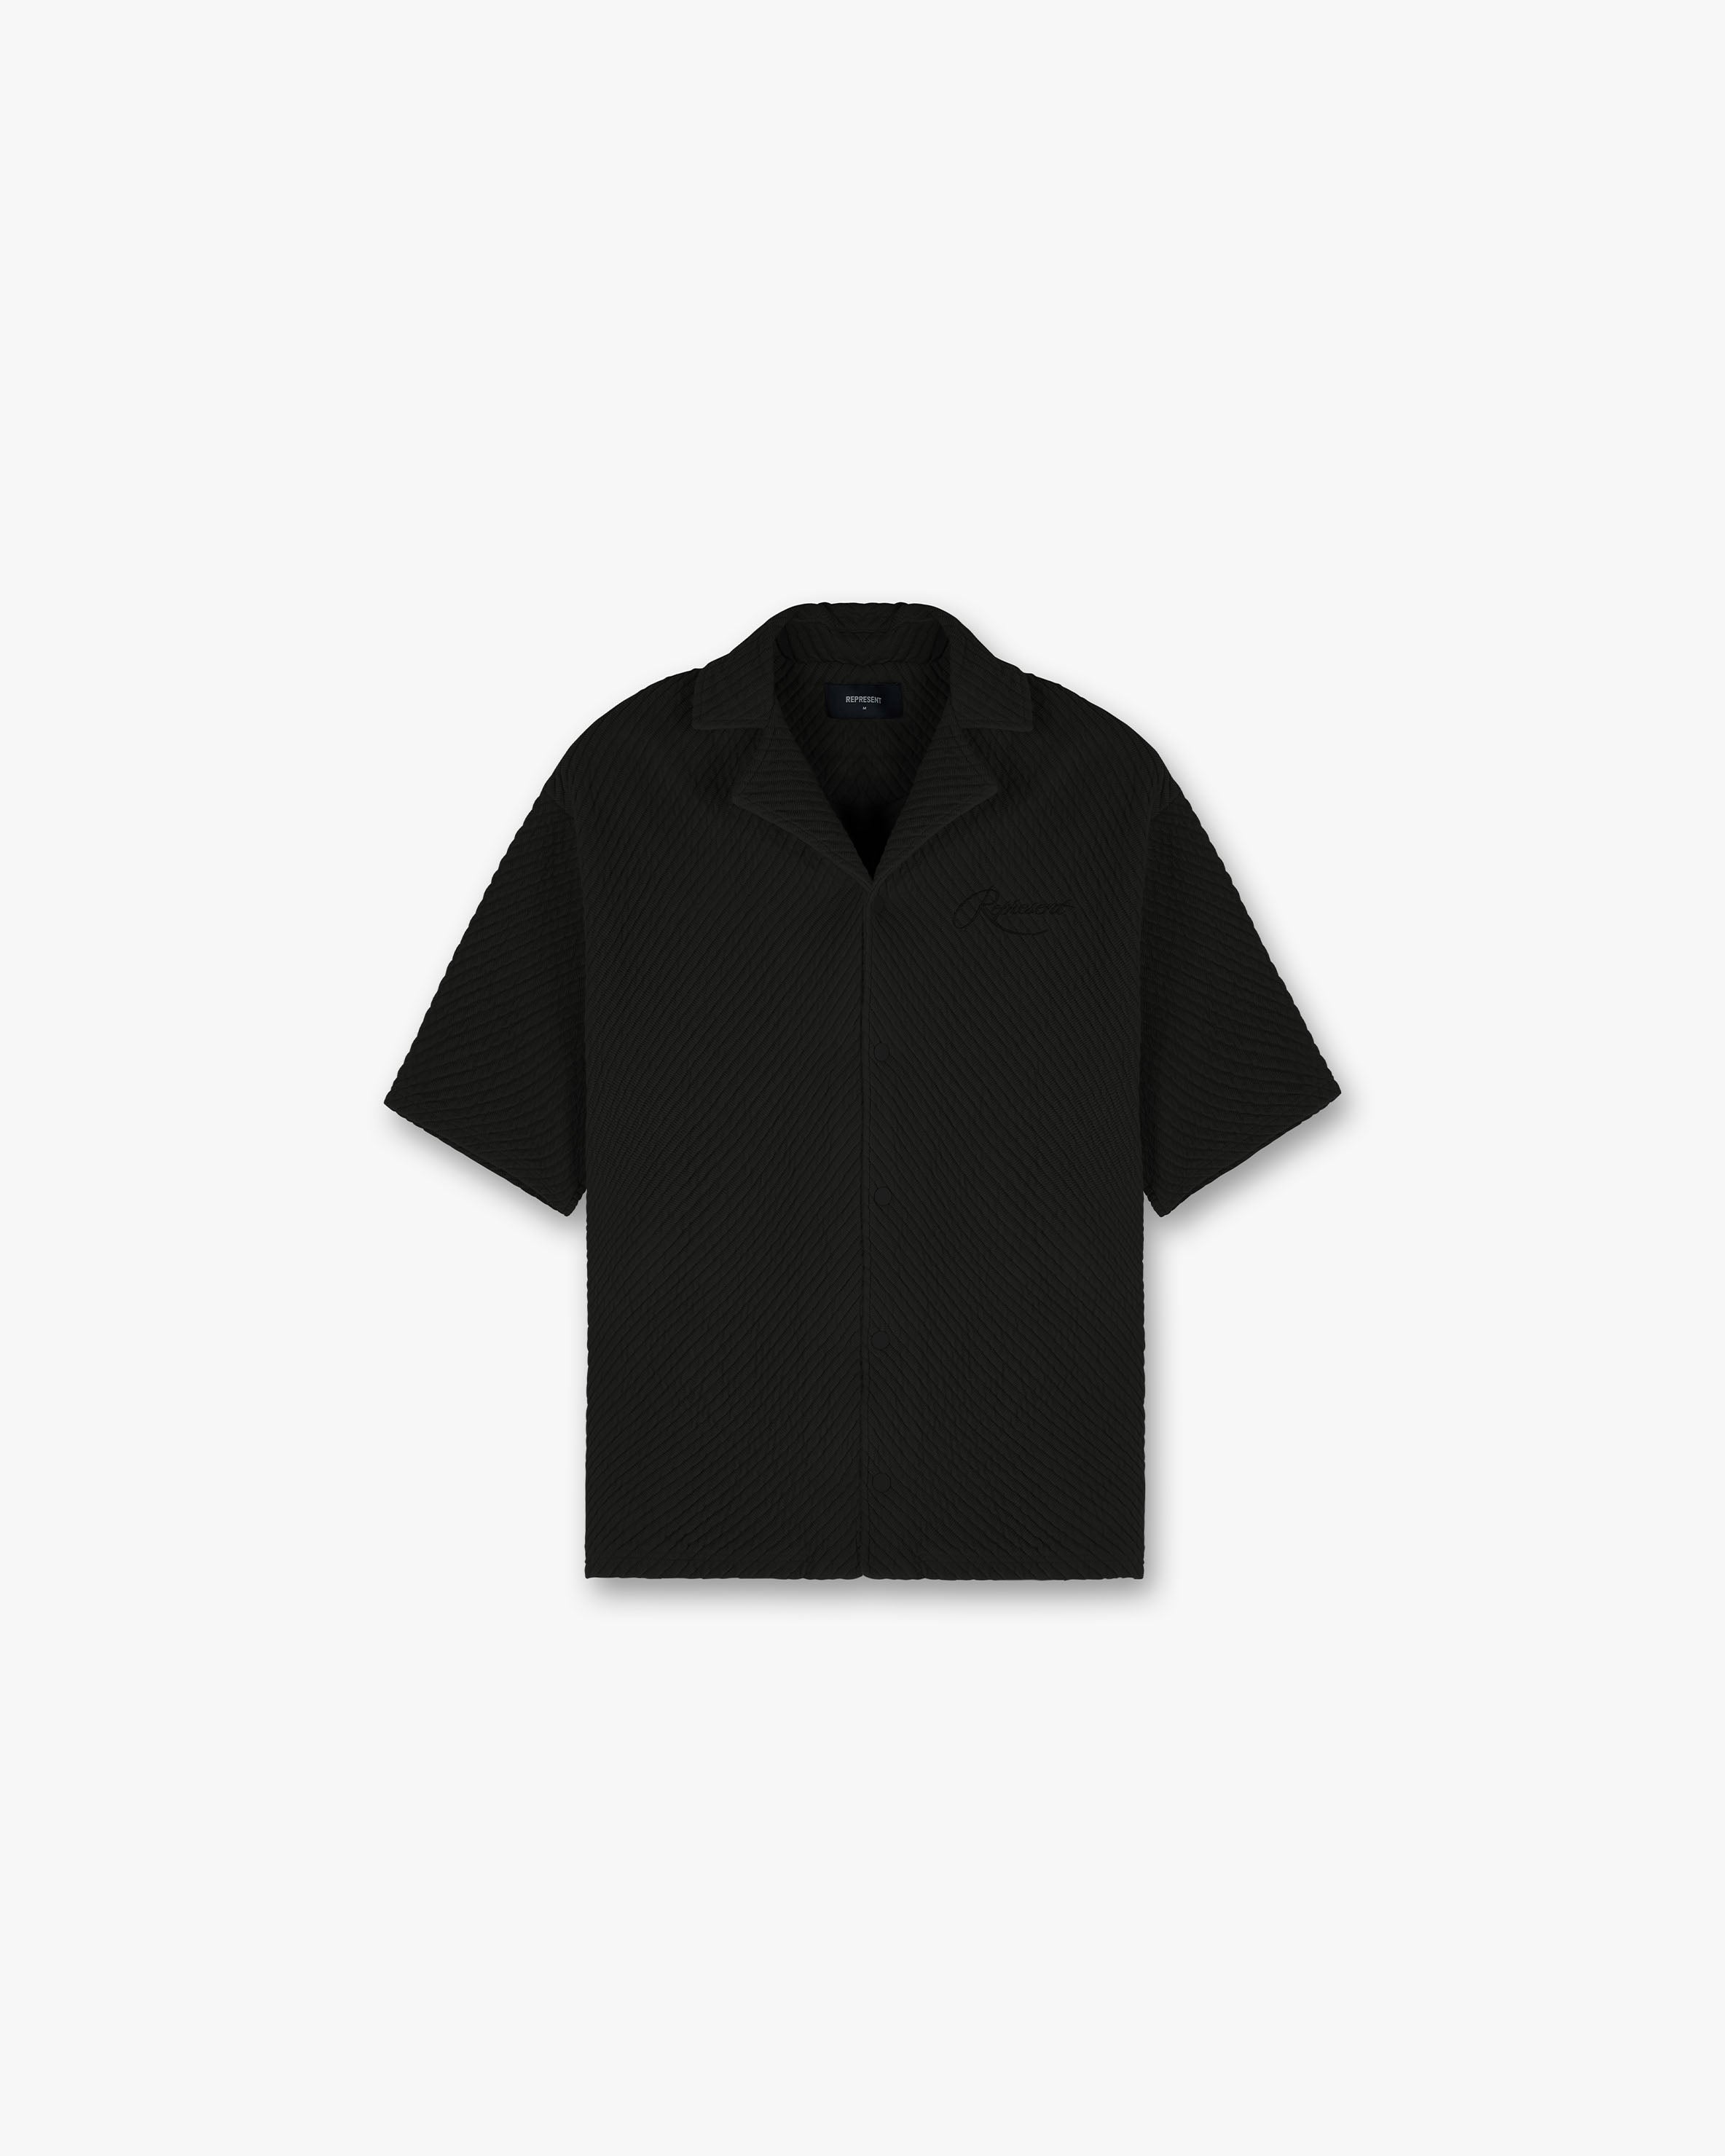 Ottoman Shirt - Black